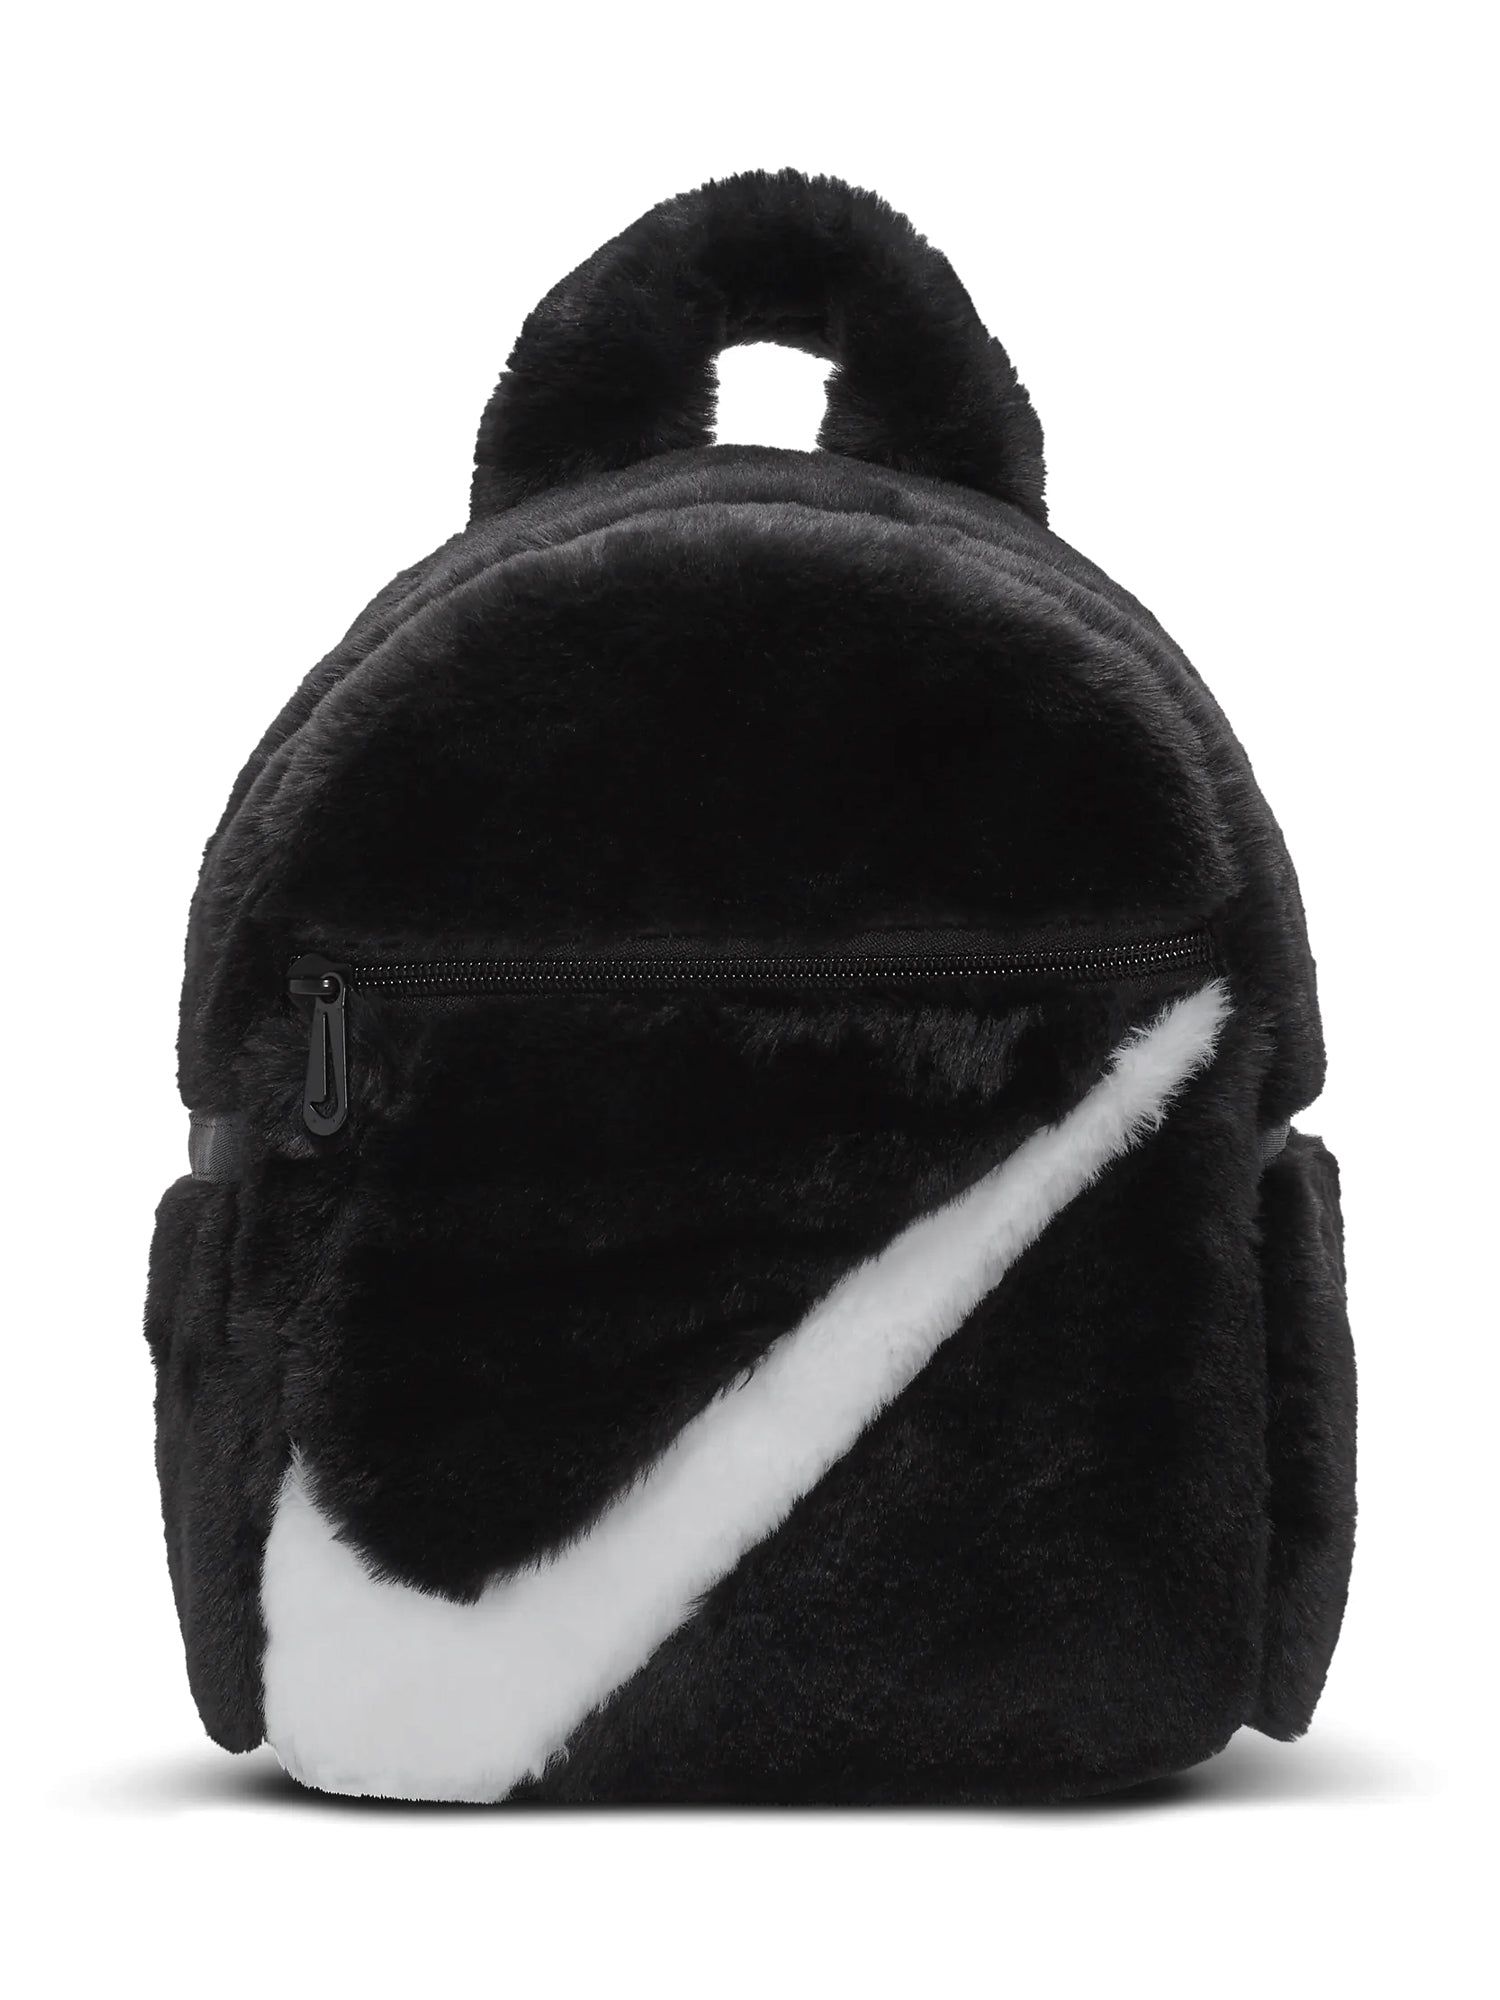 Nike Sportswear Futura 365 Cross-body Bag (3L)